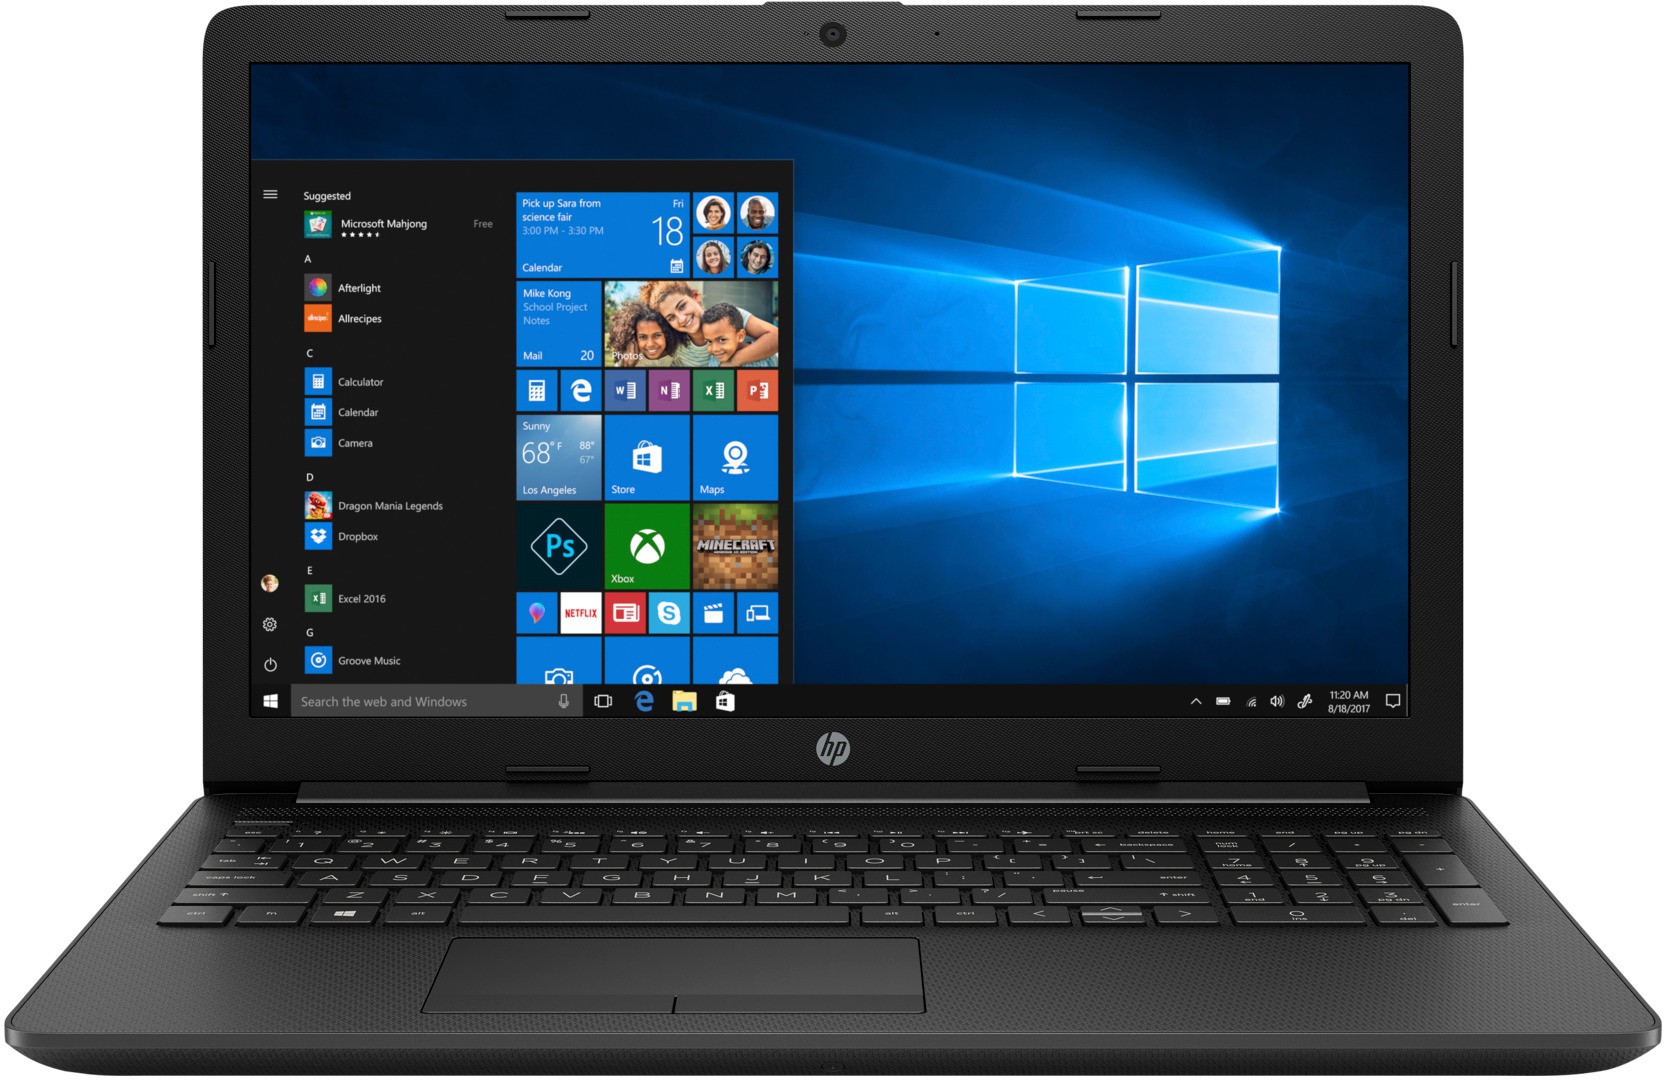 HP 15 Ryzen 3 Dual Core 3200U - (4 GB/1 TB HDD/Windows 10 Home) 15-db1069AU Laptop (15.6 inch, Jet Black, 2.04 kg, With MS Office)